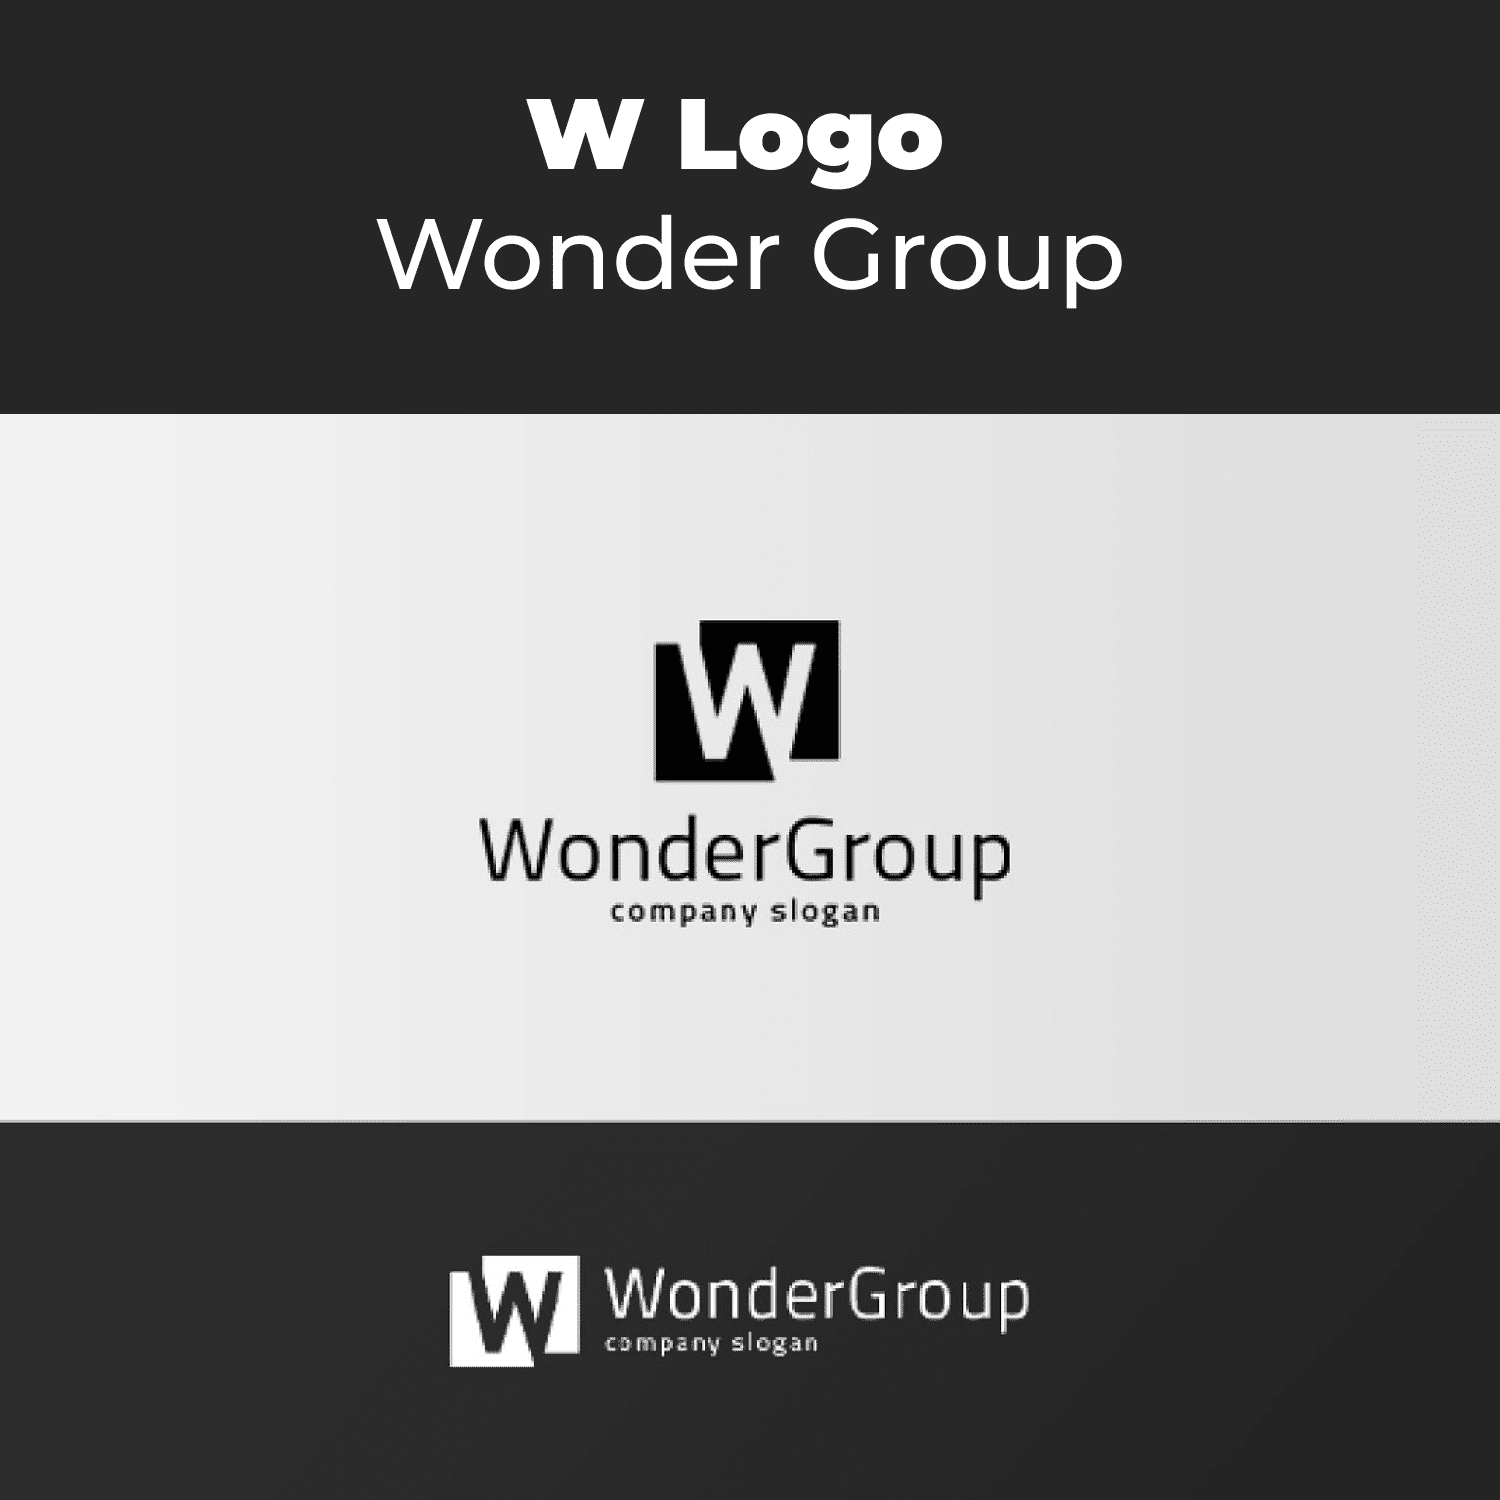 W Logo - Wonder Group.